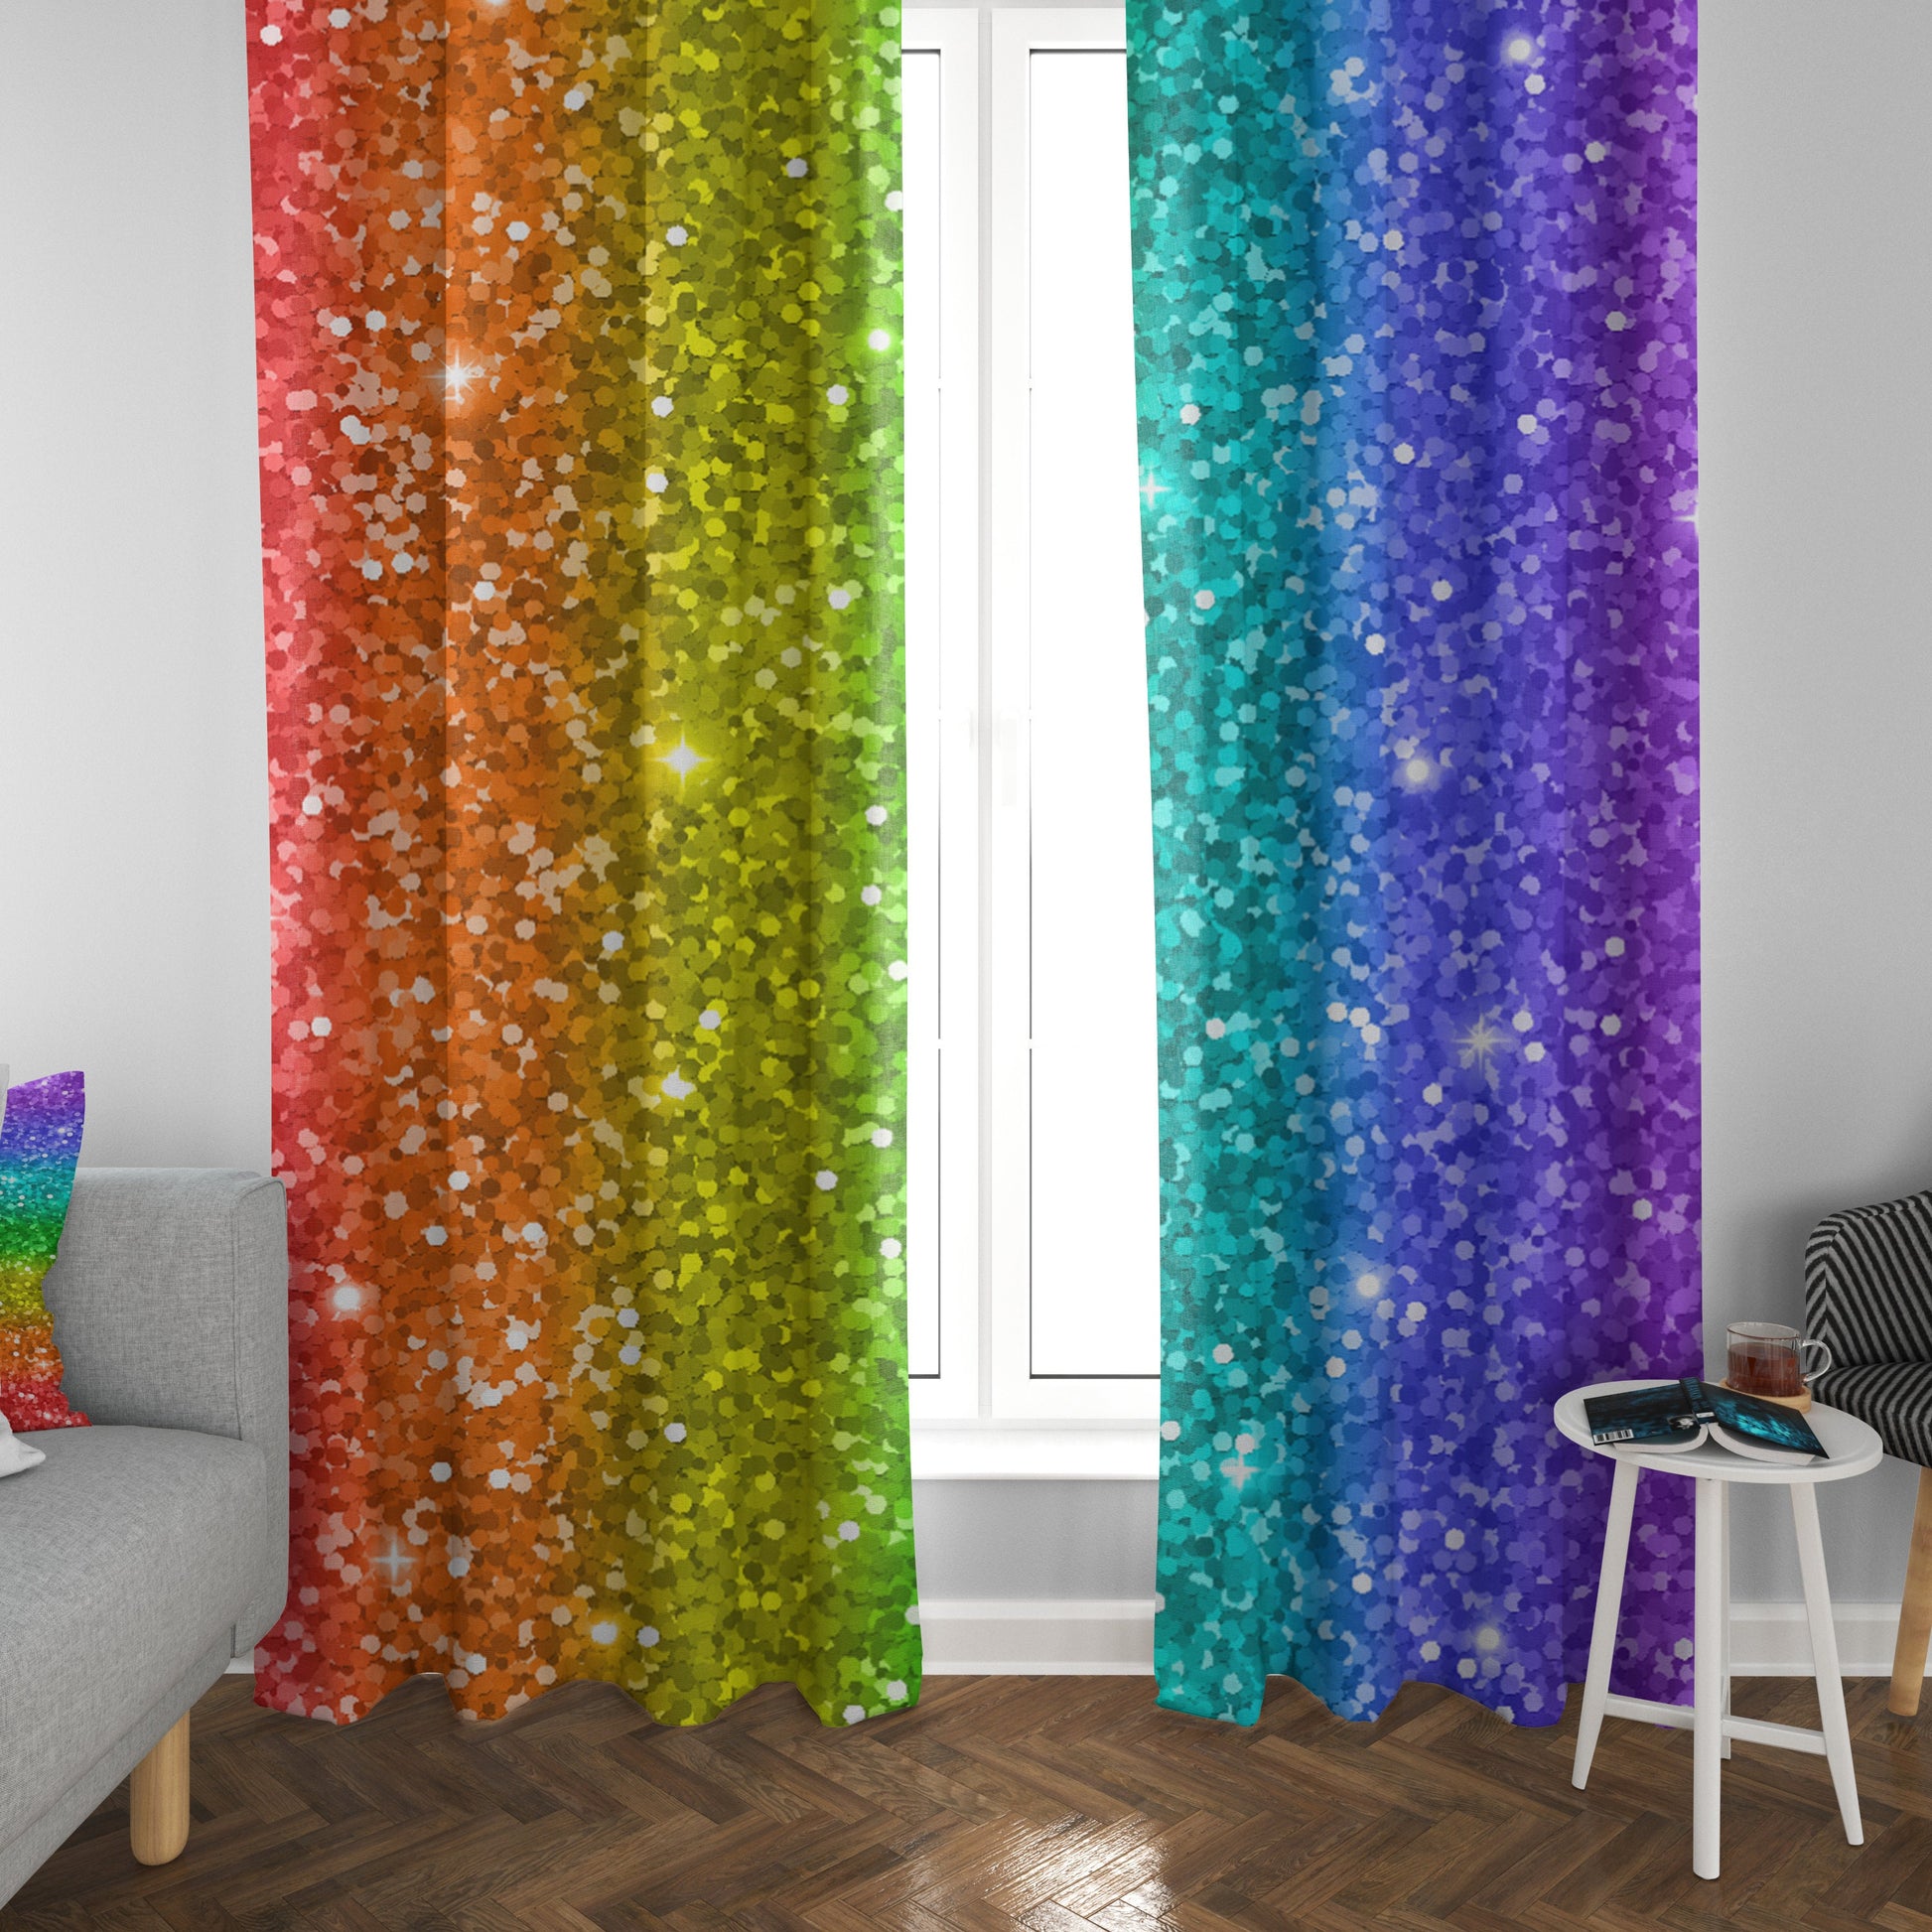 Rainbow Window Curtains colorful Drapery Curtain Panels lgbt window treatment gay pride curtain colorful curtains rainbow curtains kids